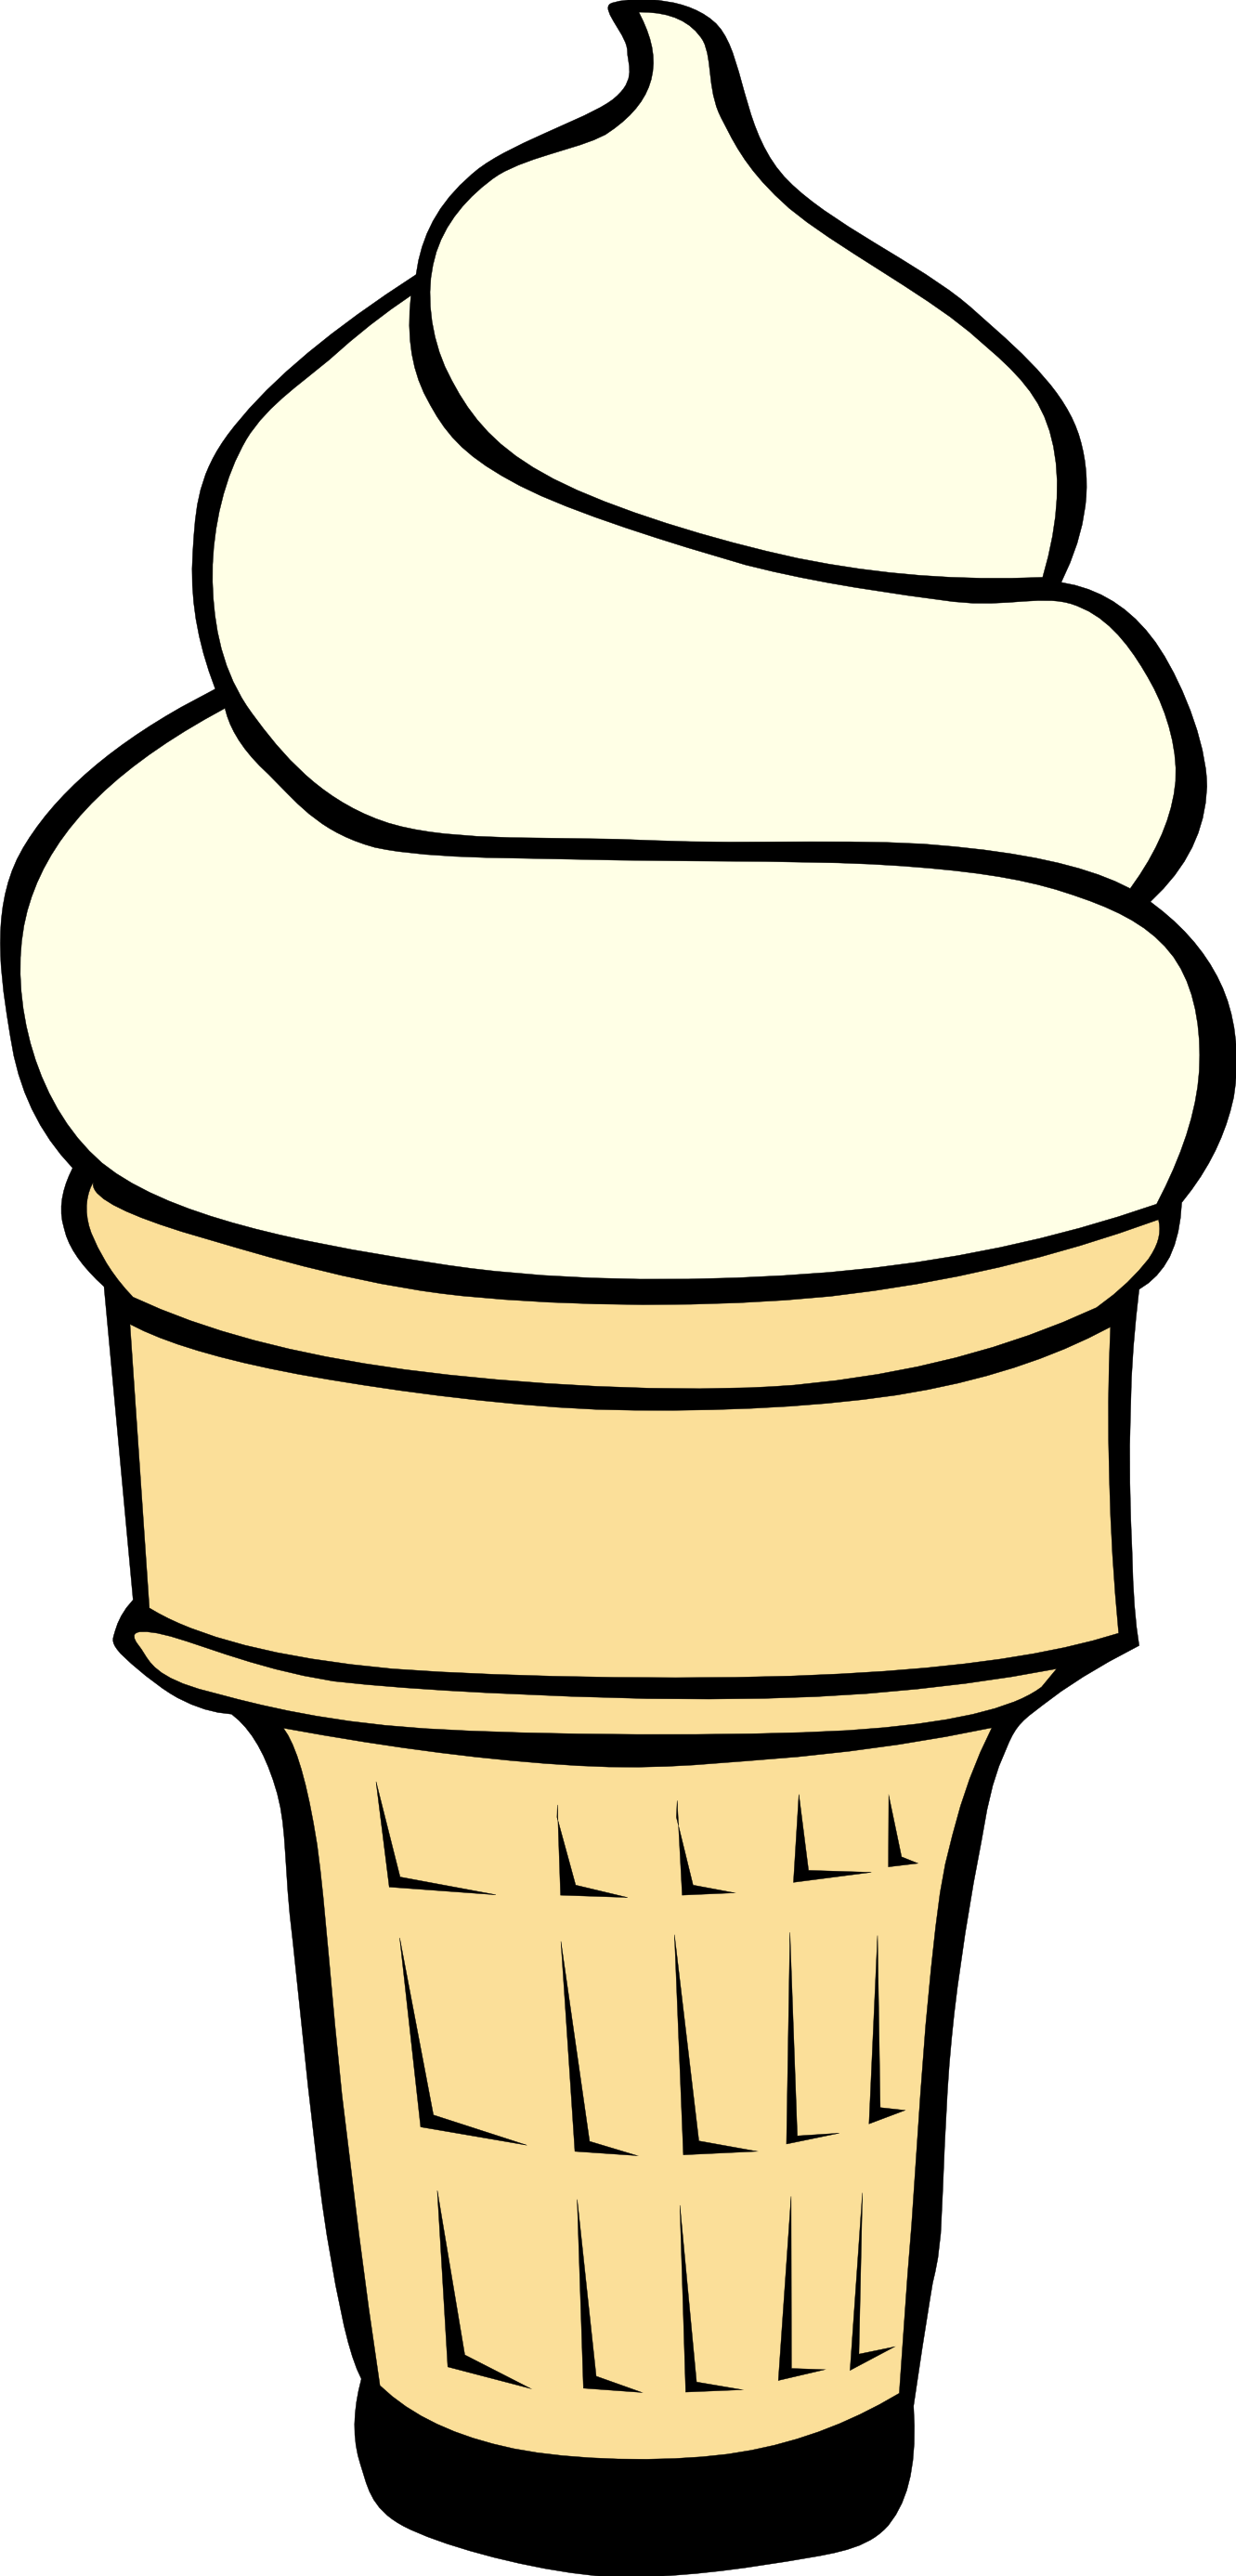 Ice Cream Clip Art Borders Free | Clipart Panda - Free Clipart Images